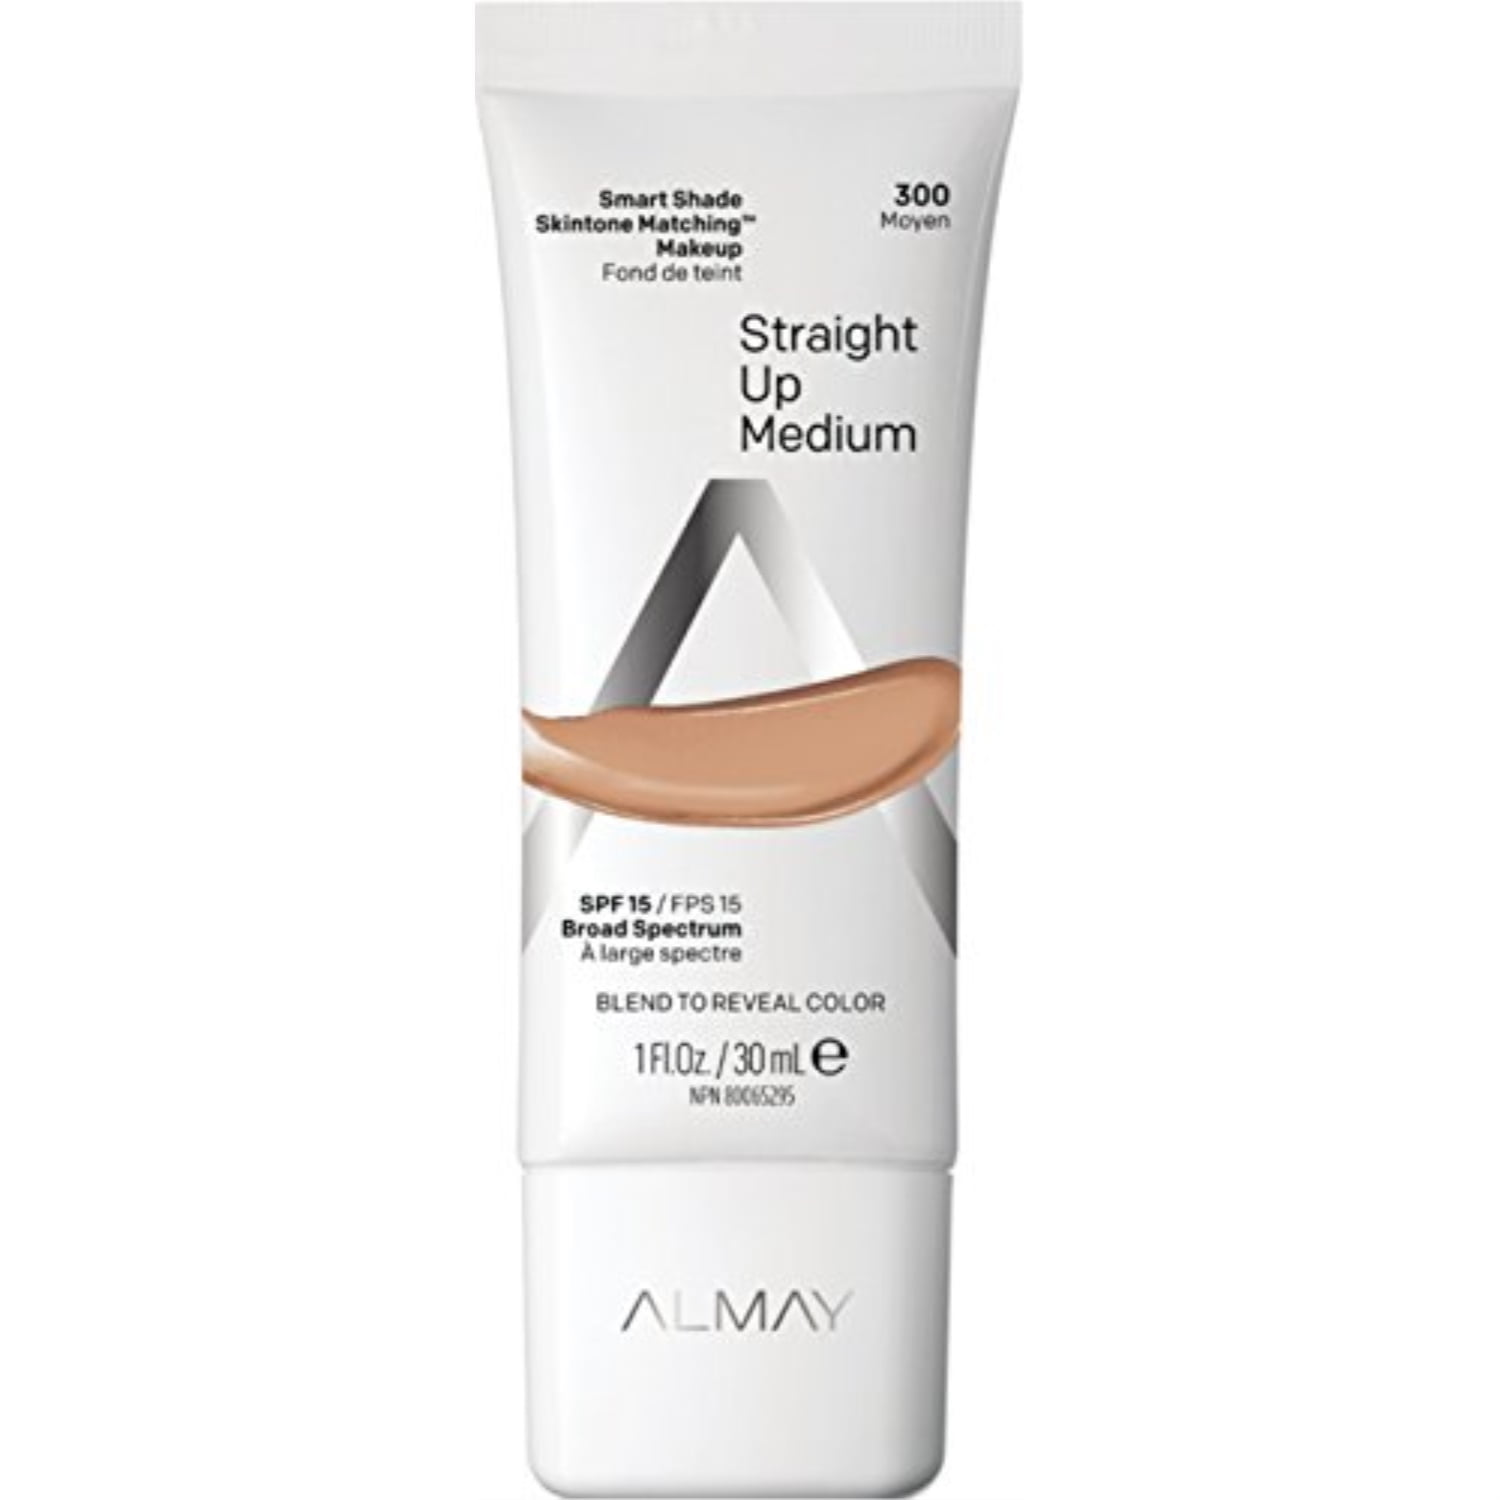 Almay Smart Shade Skintone Matching Makeup, Medium